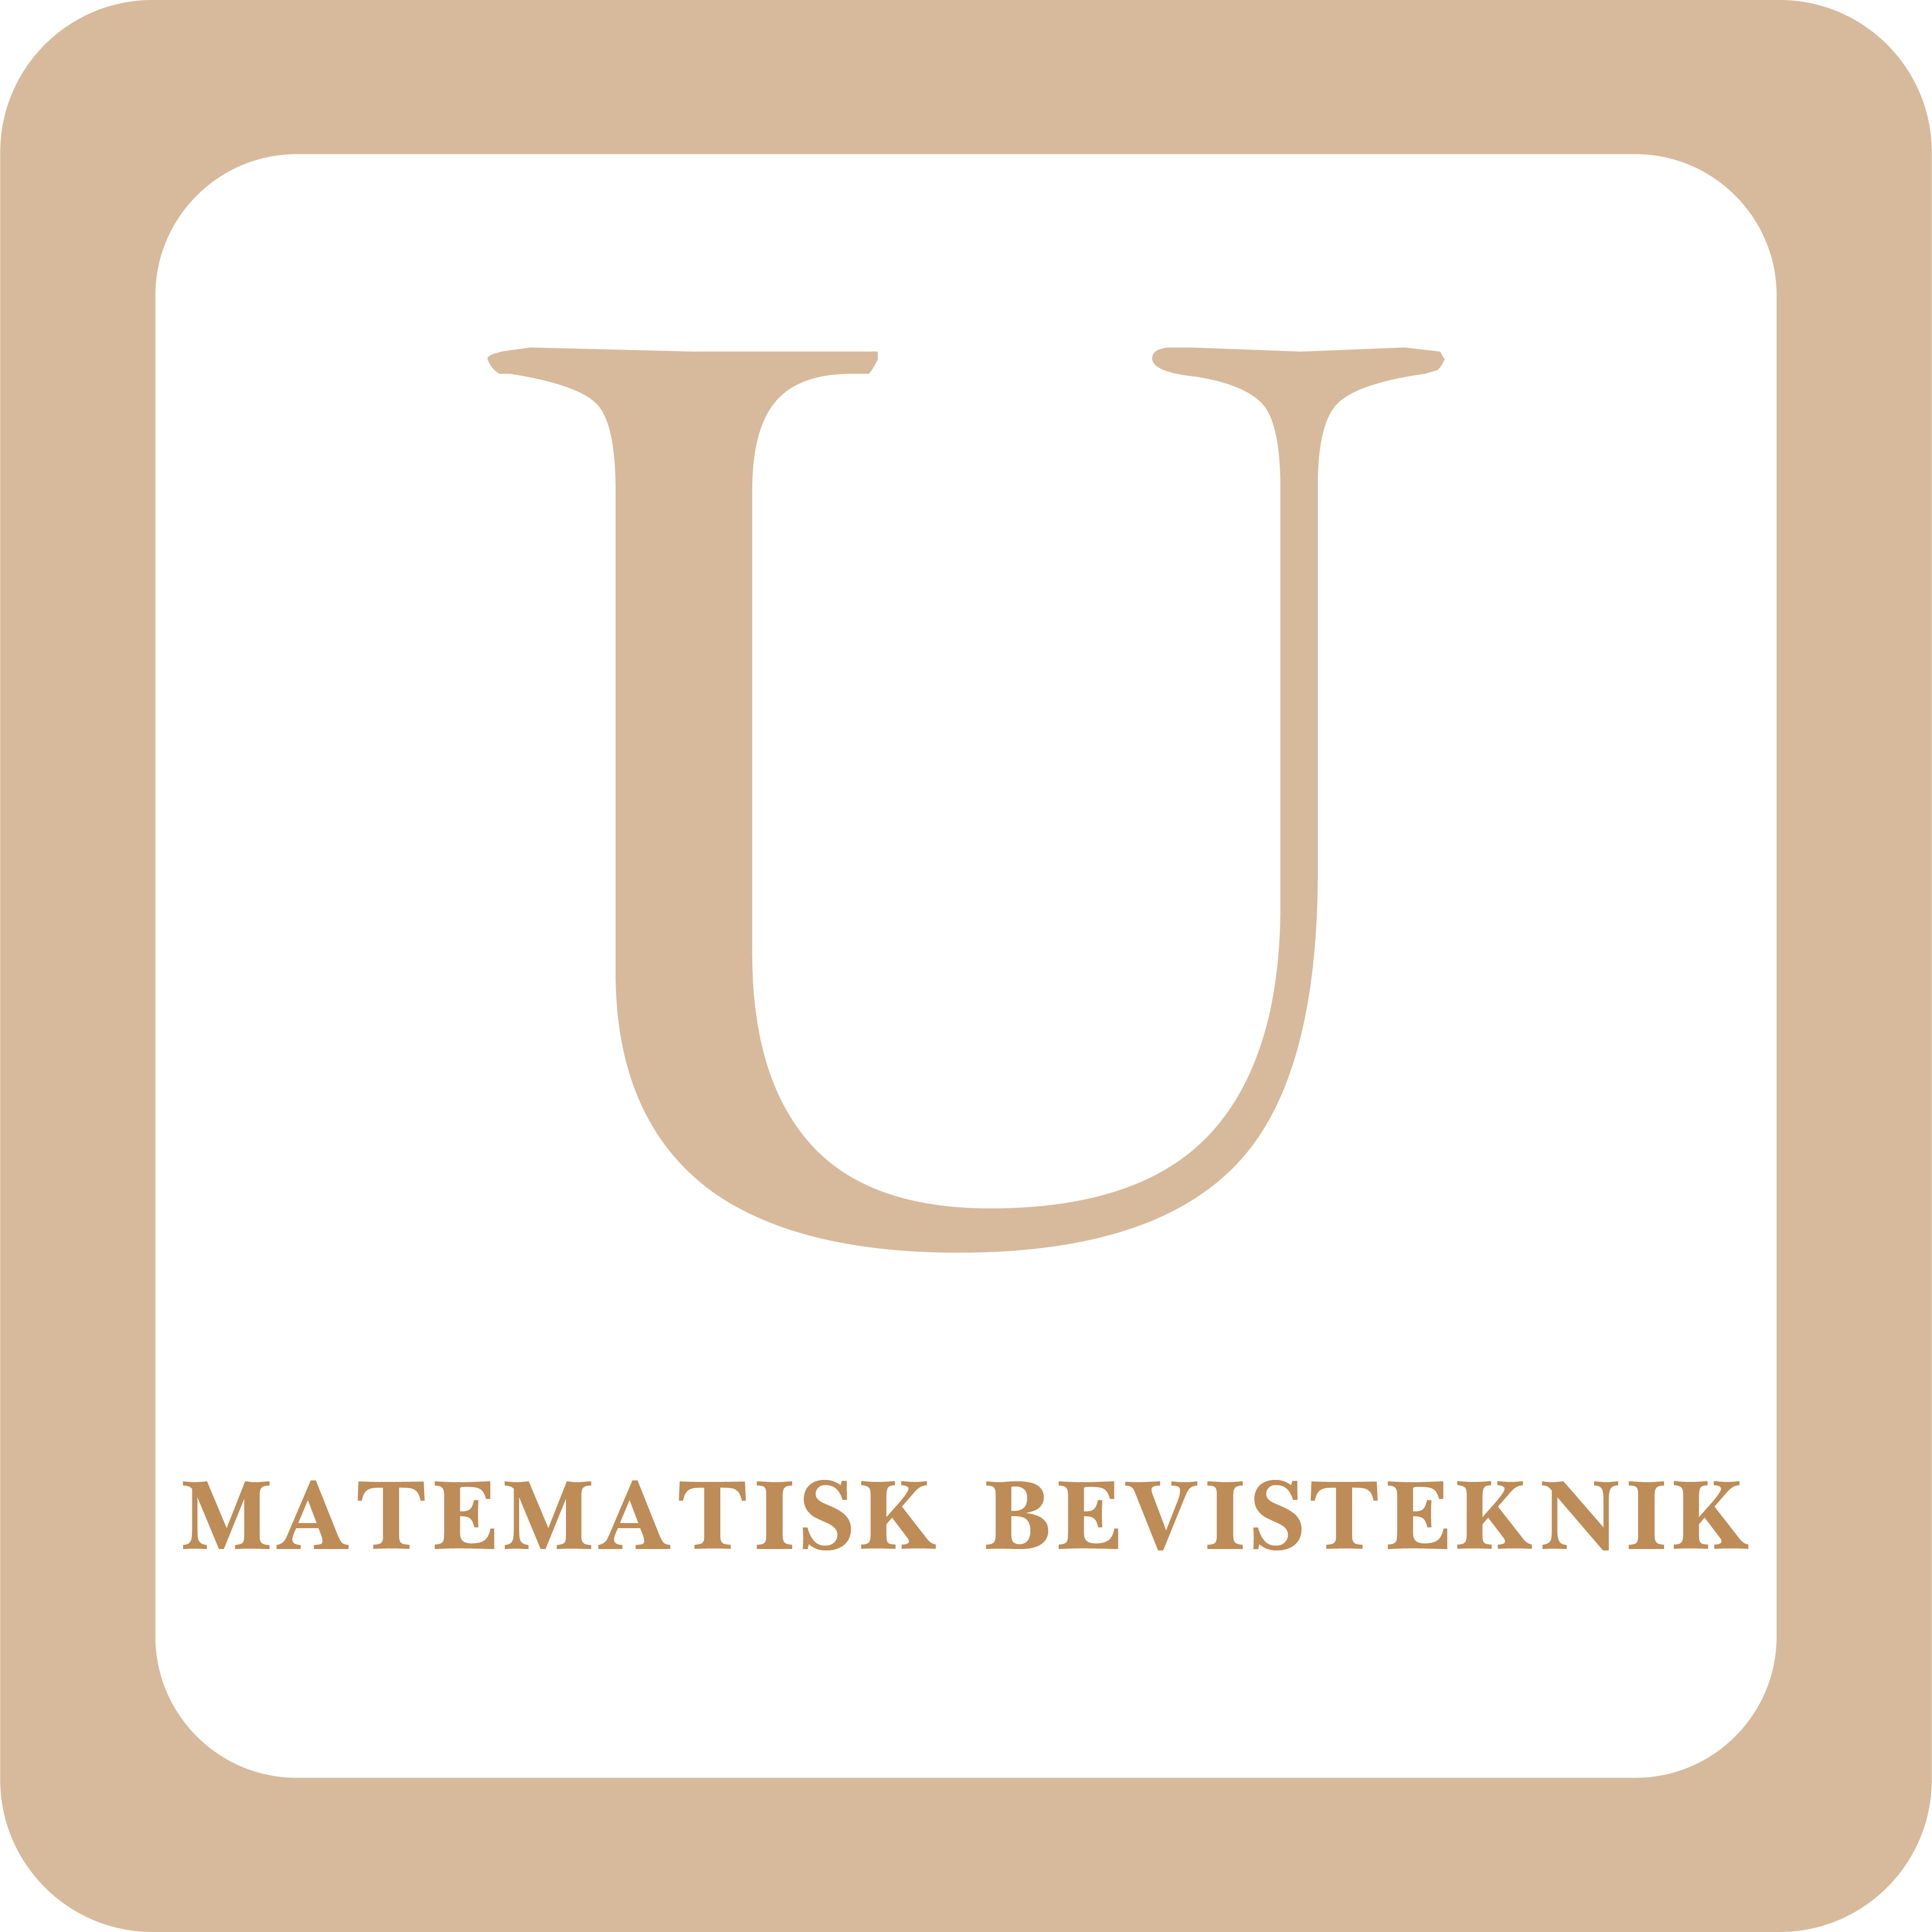 Read more about the article Matematisk Bevisteknik